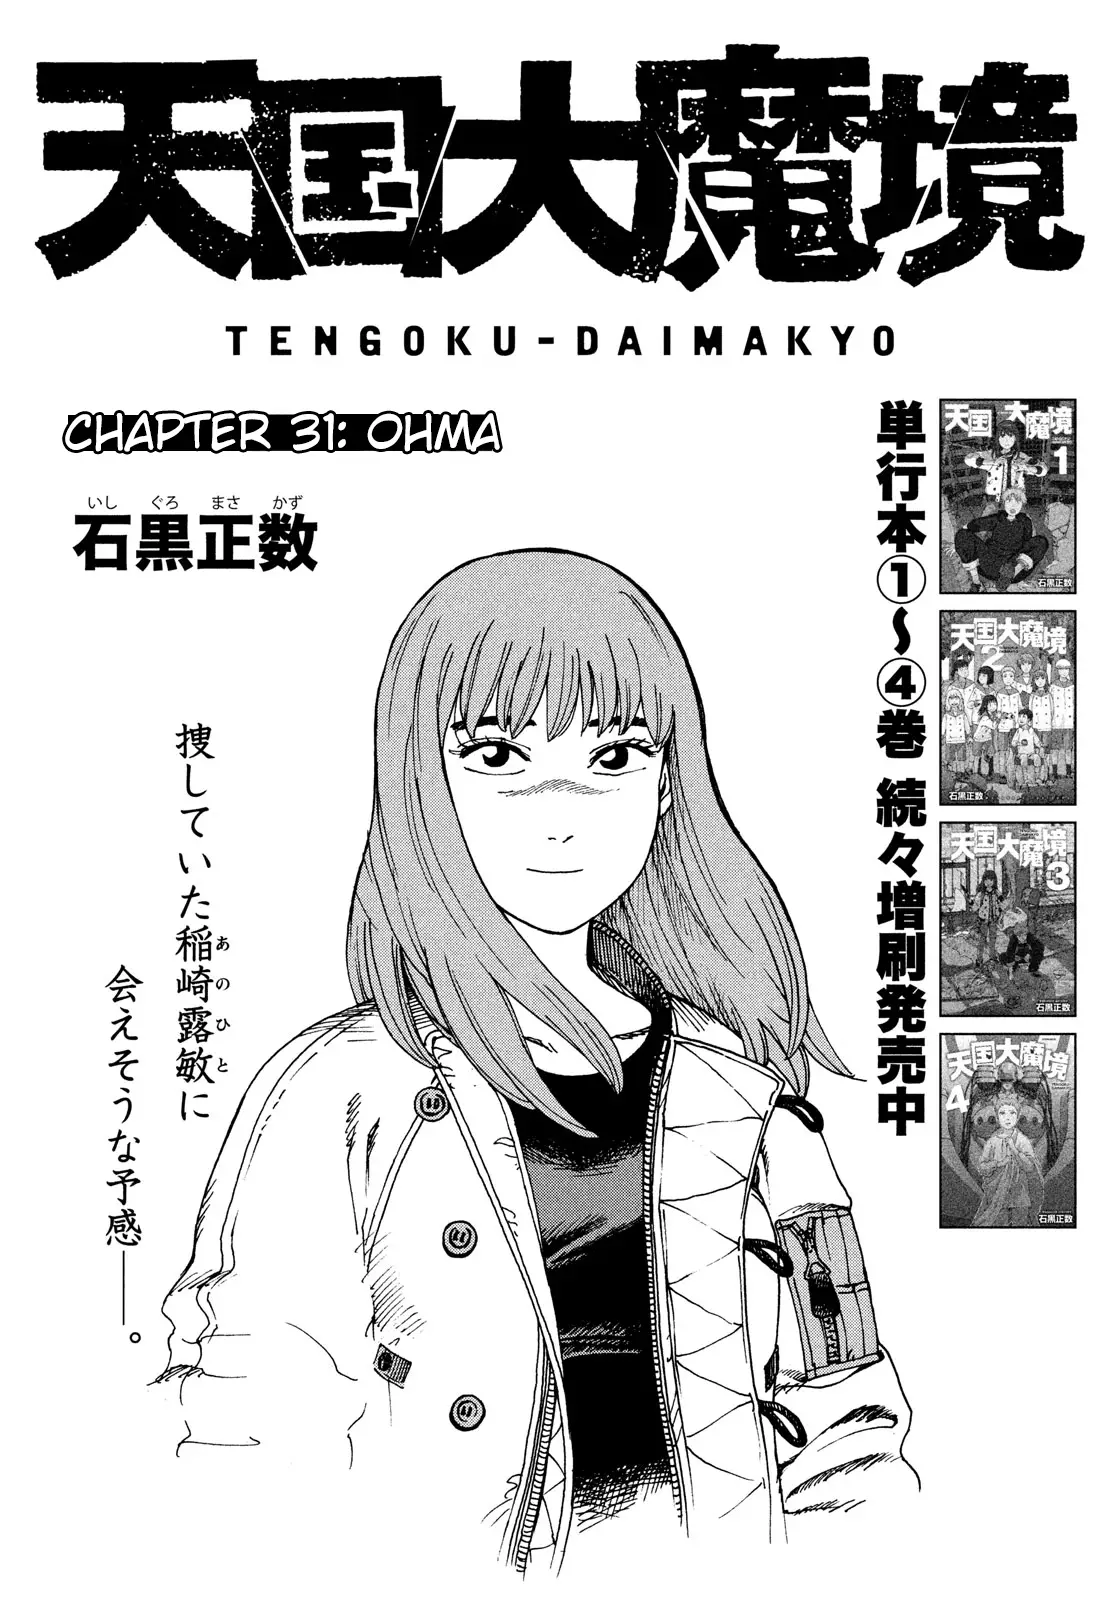 Read Tengoku Daimakyou 22 - Oni Scan